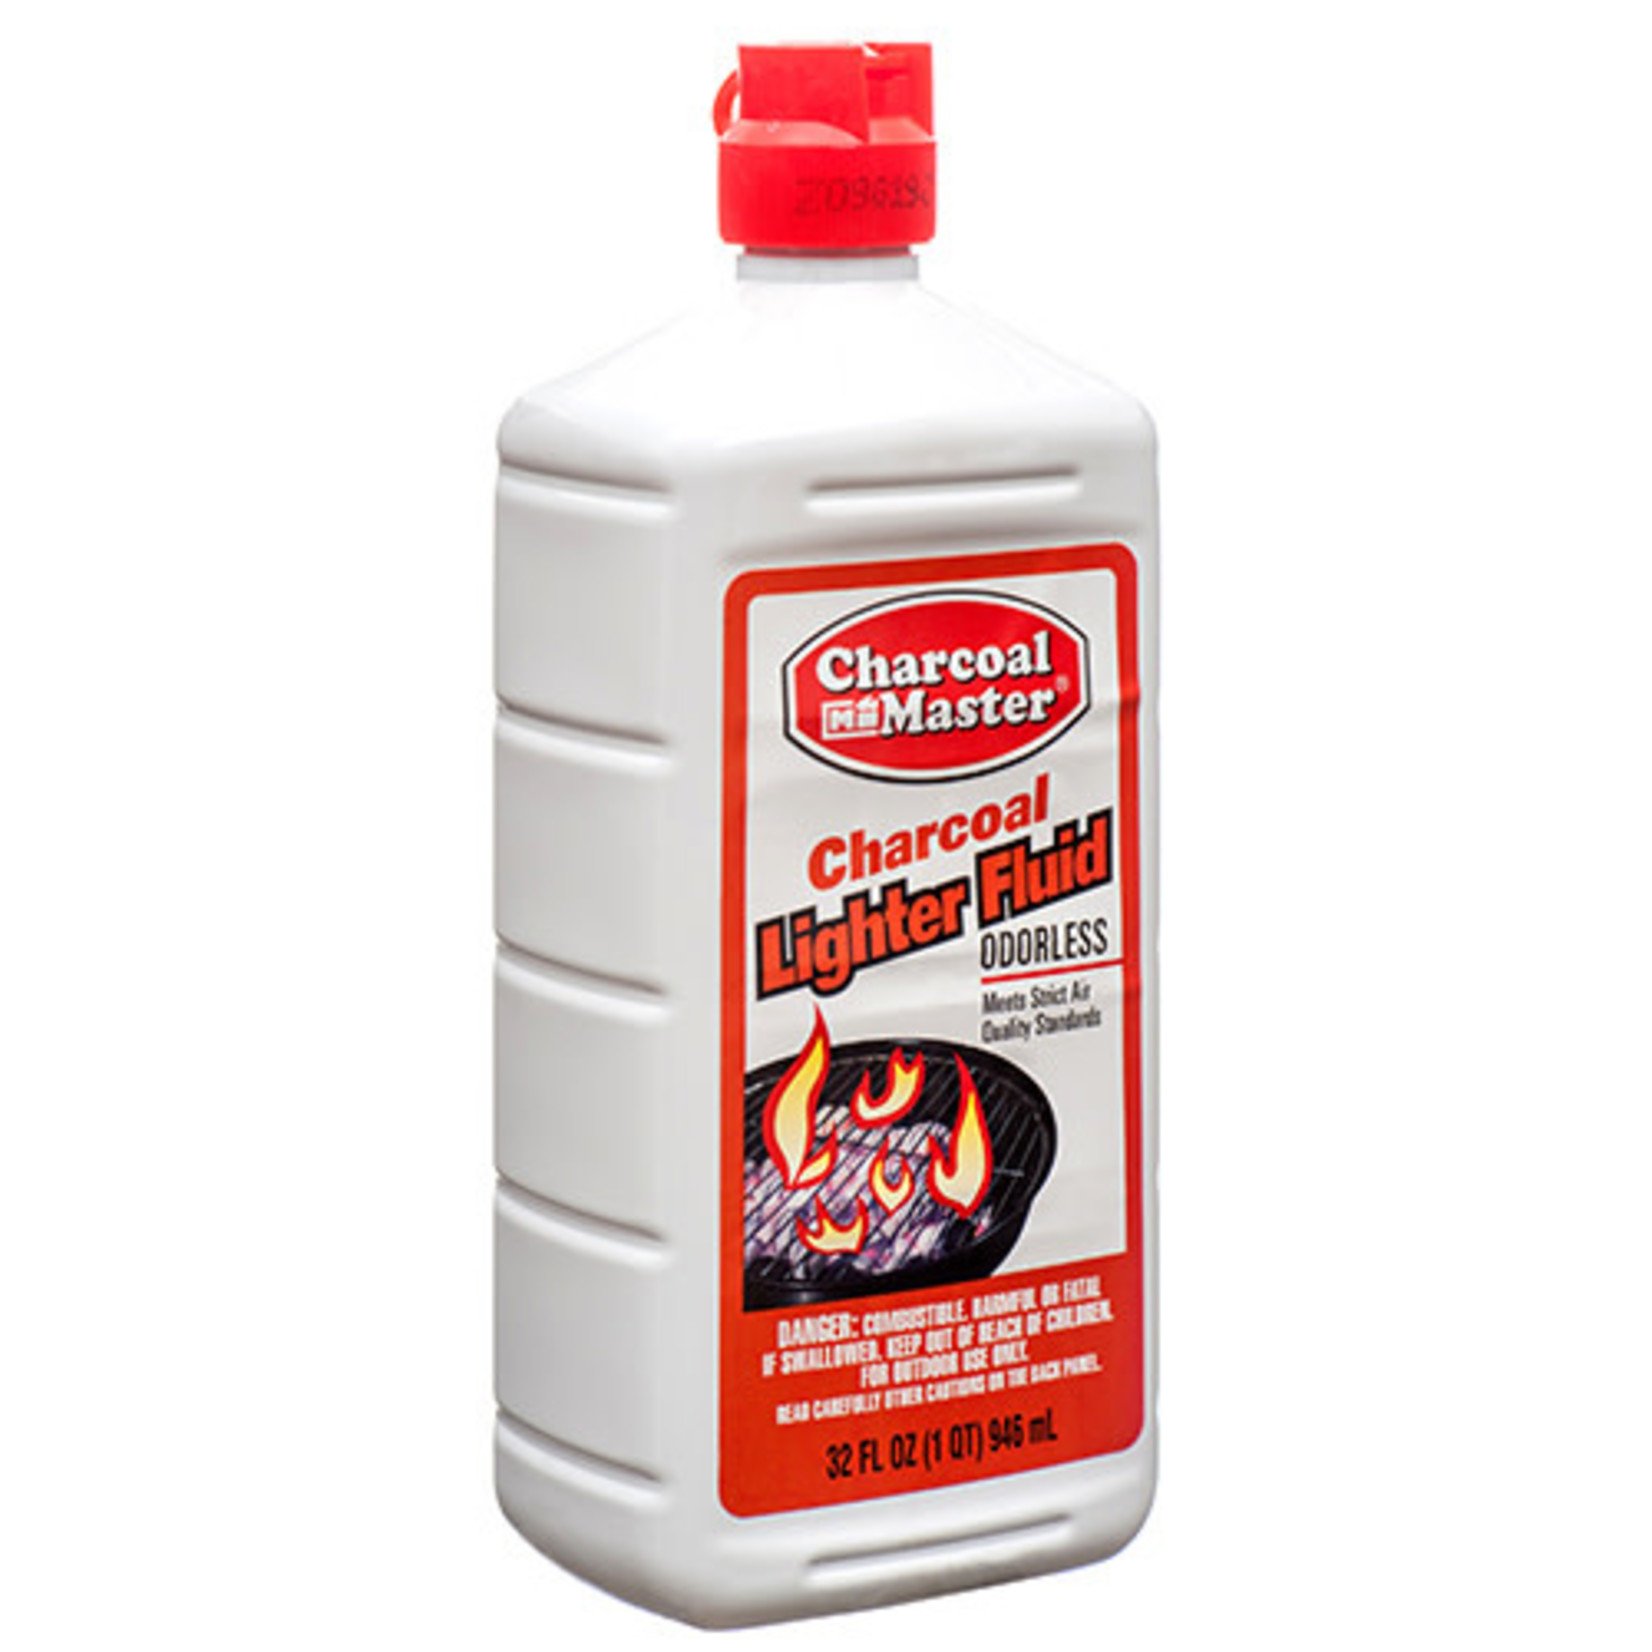 Charcol lighter fluid 32 oz